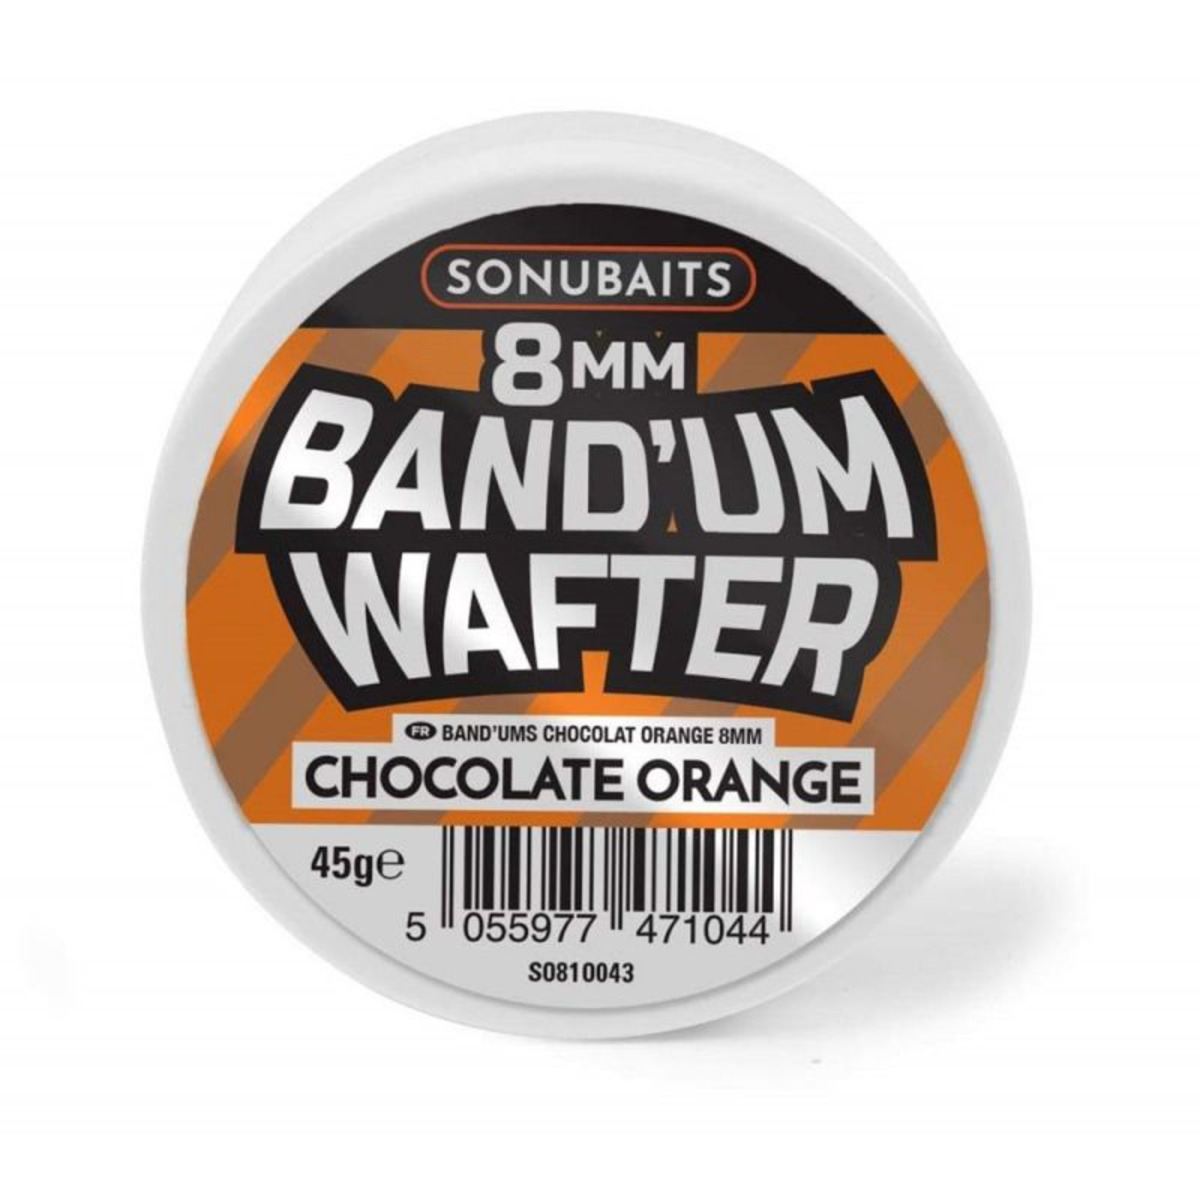 Sonubaits Band’um Wafters - 8 mm - Chocolate Orange